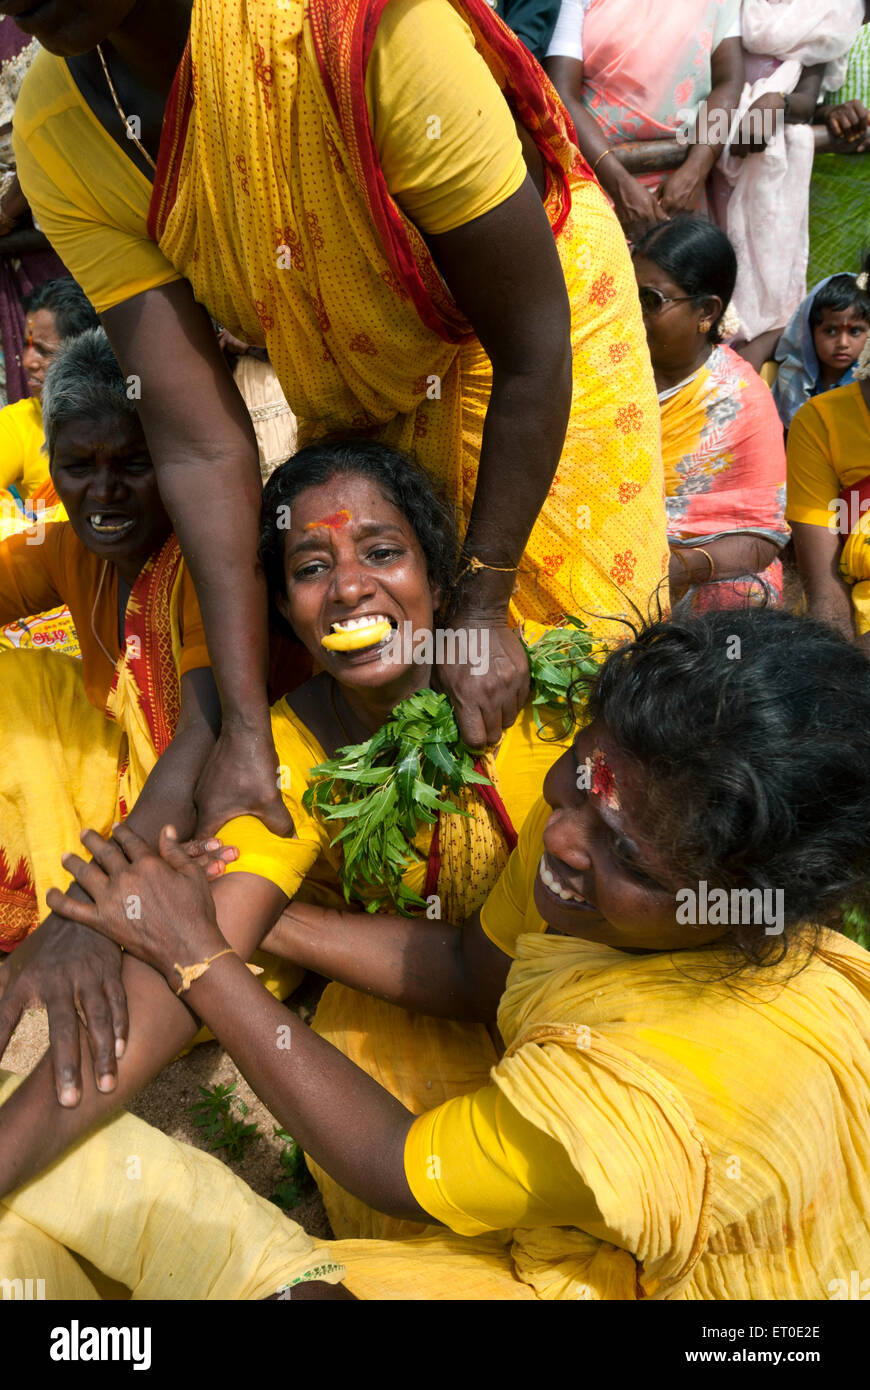 Les adeptes des danses de transe dans le festival duryodhana padukalam ; Seviledu ; Kanchipuram ; district de Kancheepuram , Tamil Nadu ; Inde , Asie , MR#777A Banque D'Images